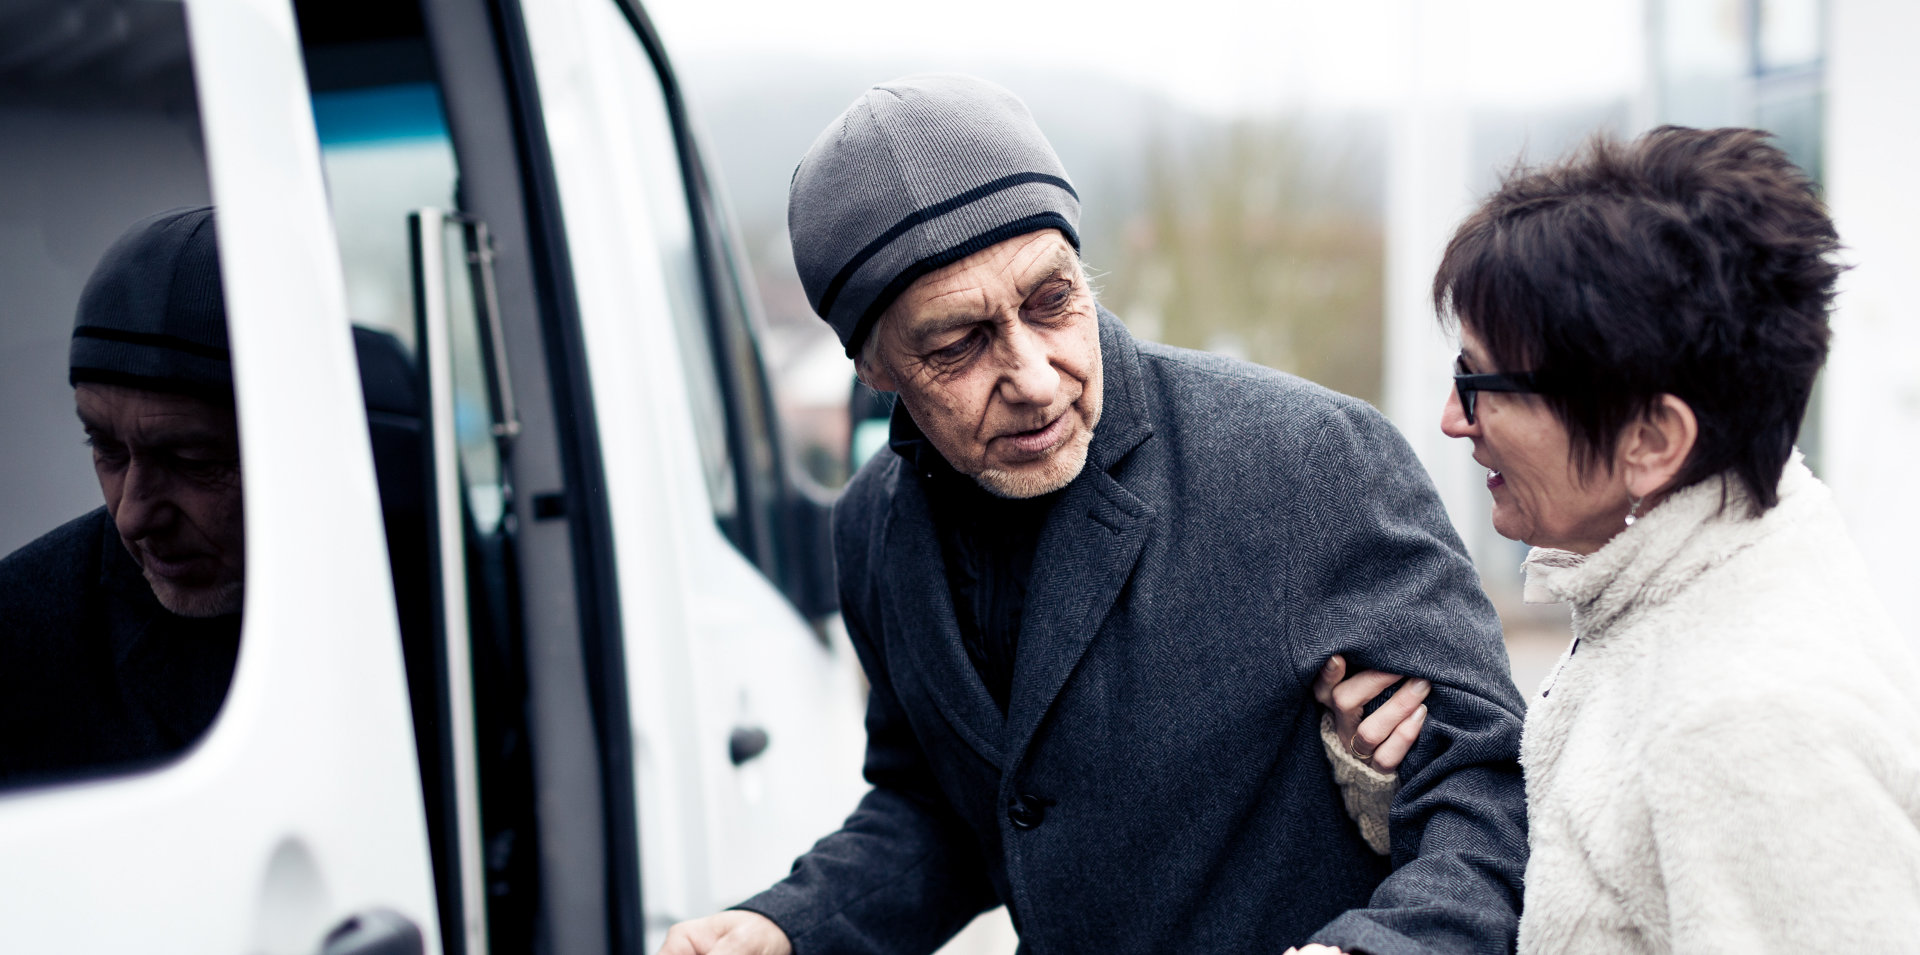 elderly woman helping a senior man in boarding a van